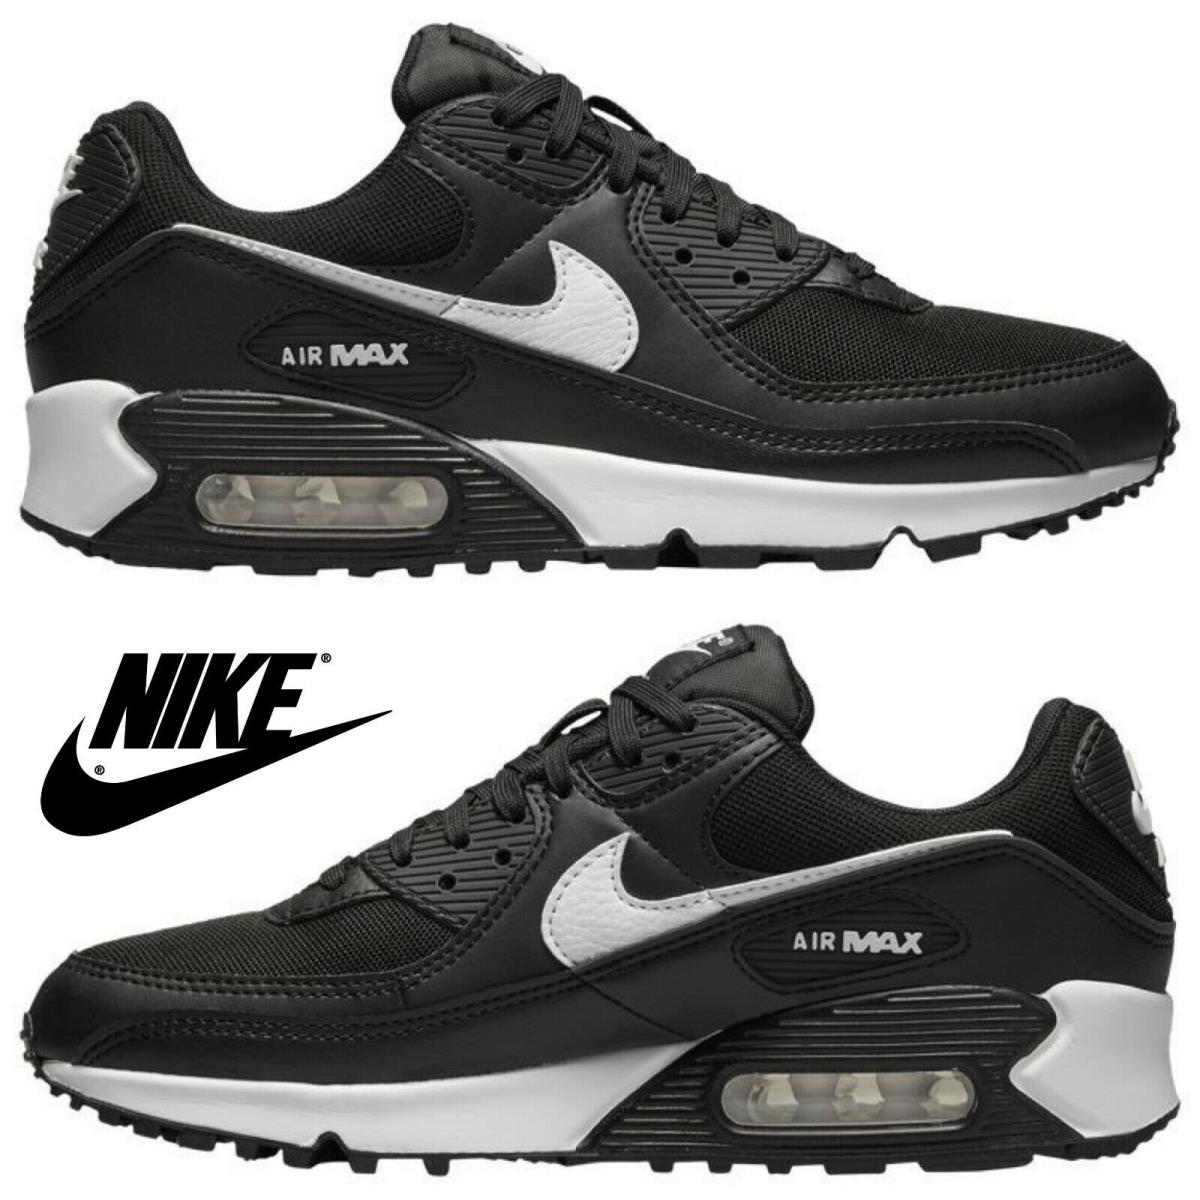 Nike Air Max 90 Women s Sneakers Casual Shoes Premium Running Sport Gym Black